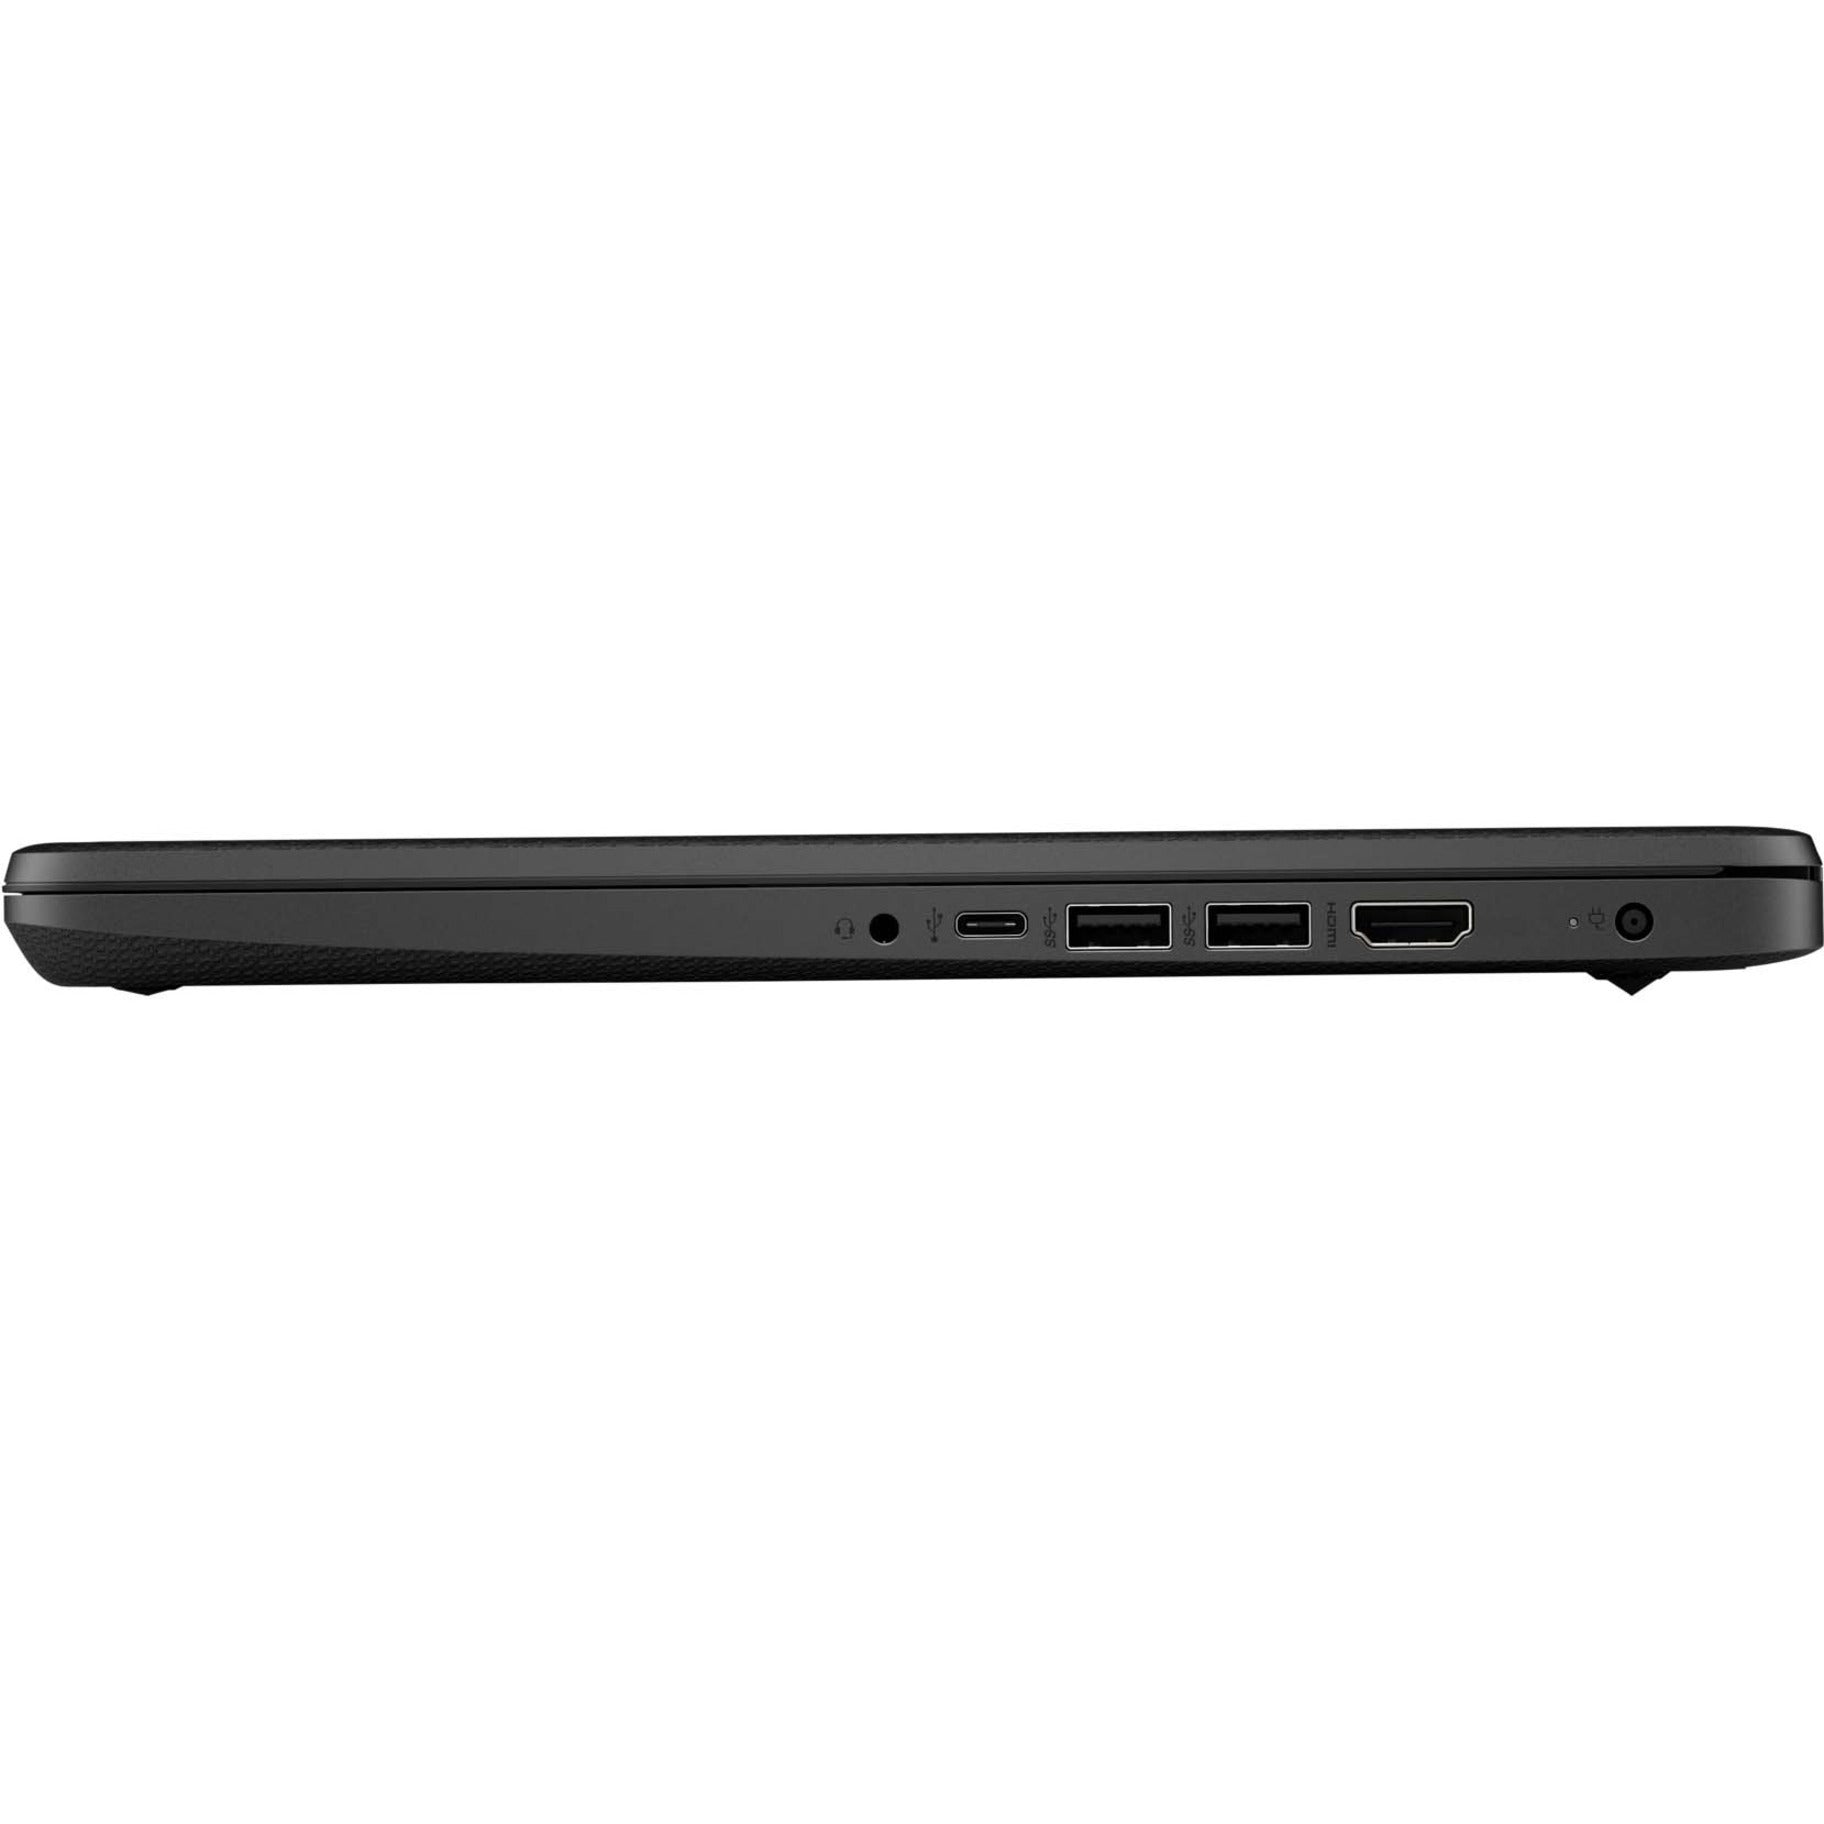 HP Laptop 14-dq0050nr 14" Touchscreen Notebook, Intel Celeron N4020, 4GB RAM, 64GB Flash Memory, Windows 10 Home in S mode